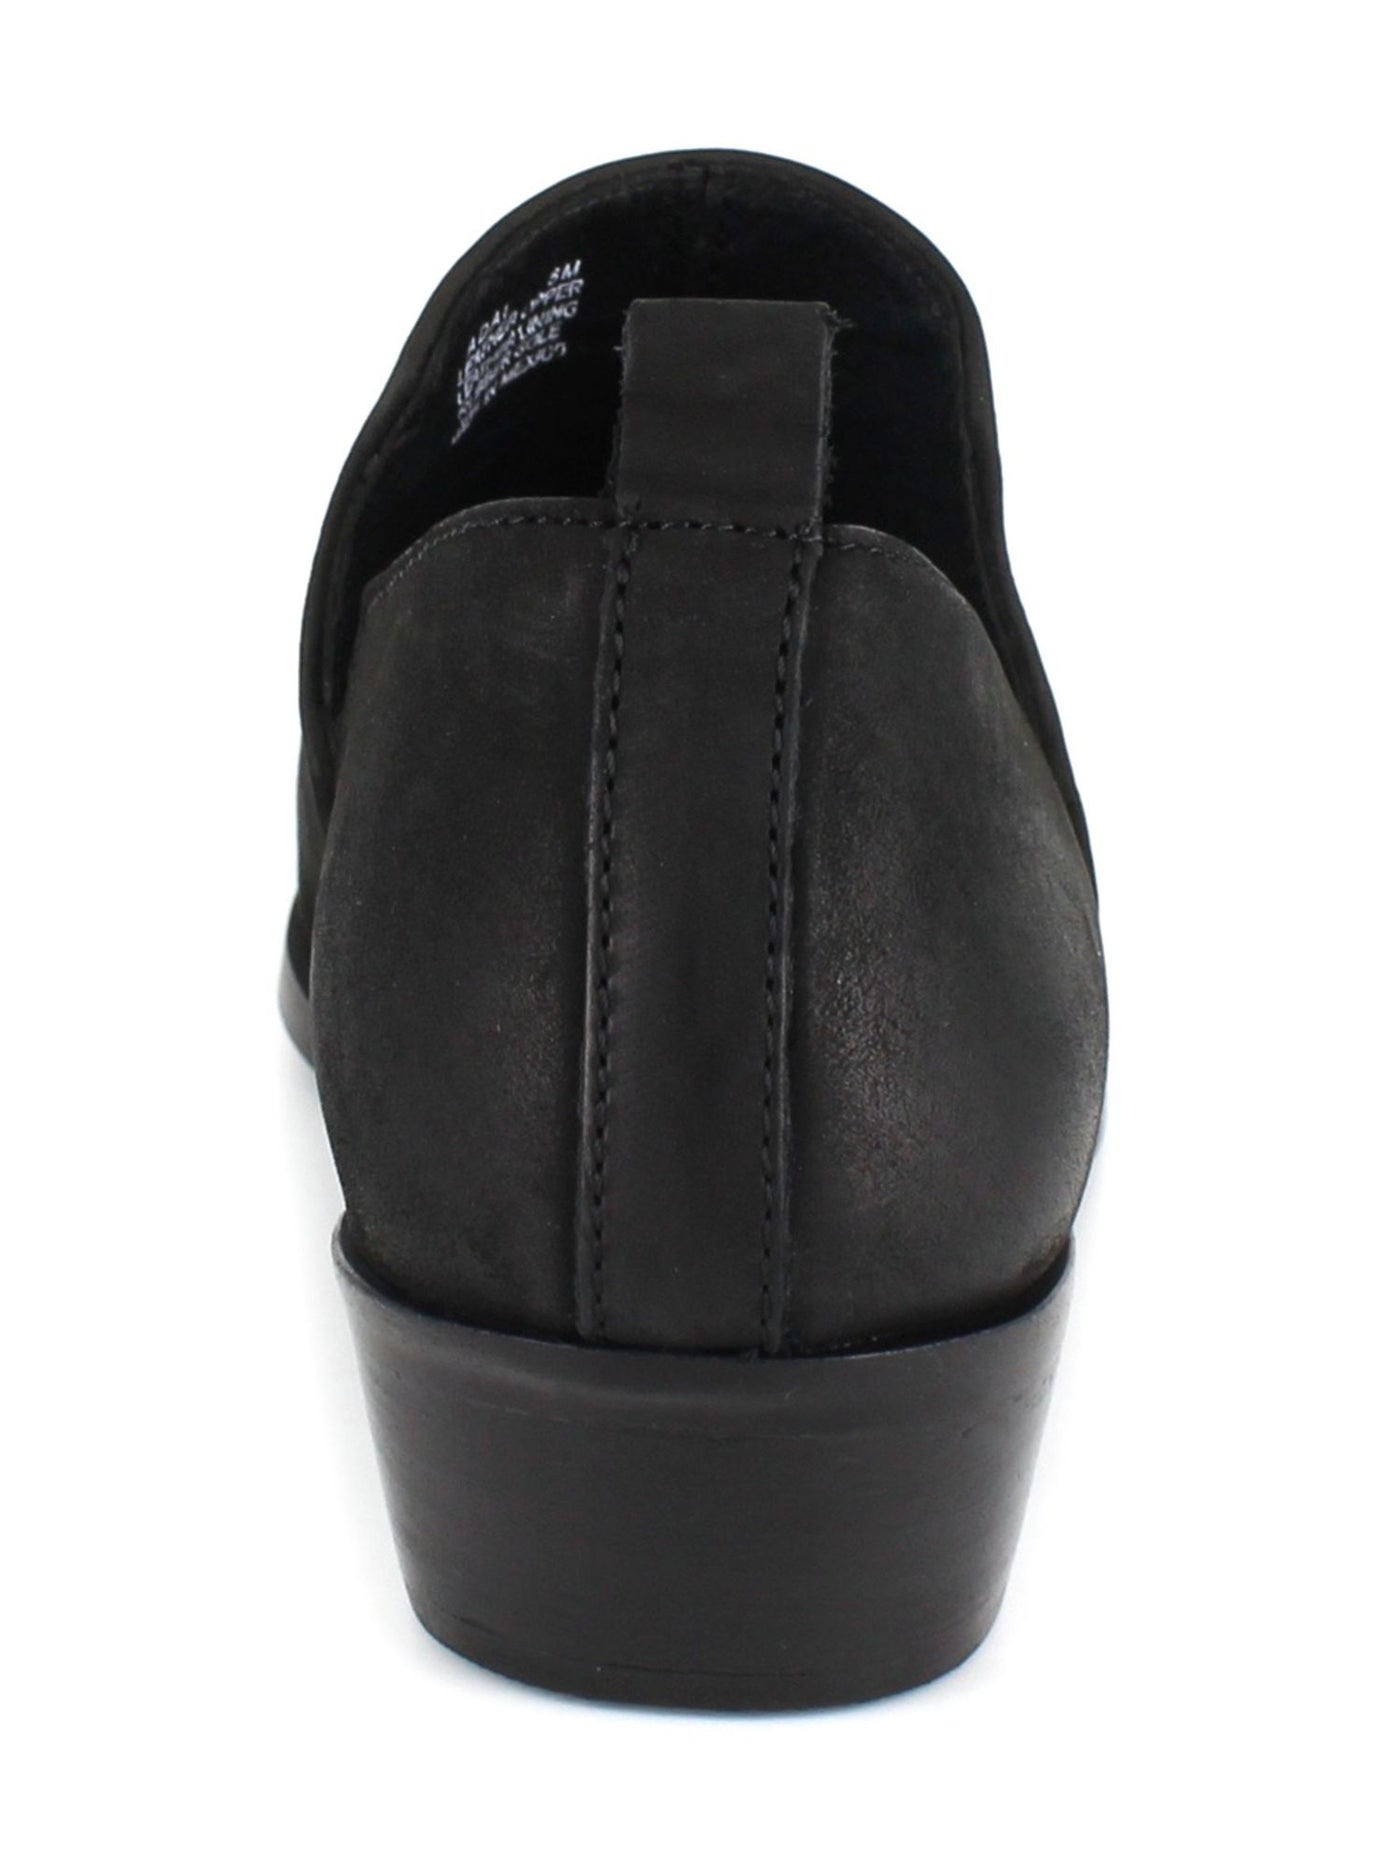 ARTISAN Womens Black Notched Western Comfort Adal Almond Toe Block Heel Slip On Leather Booties 8 M